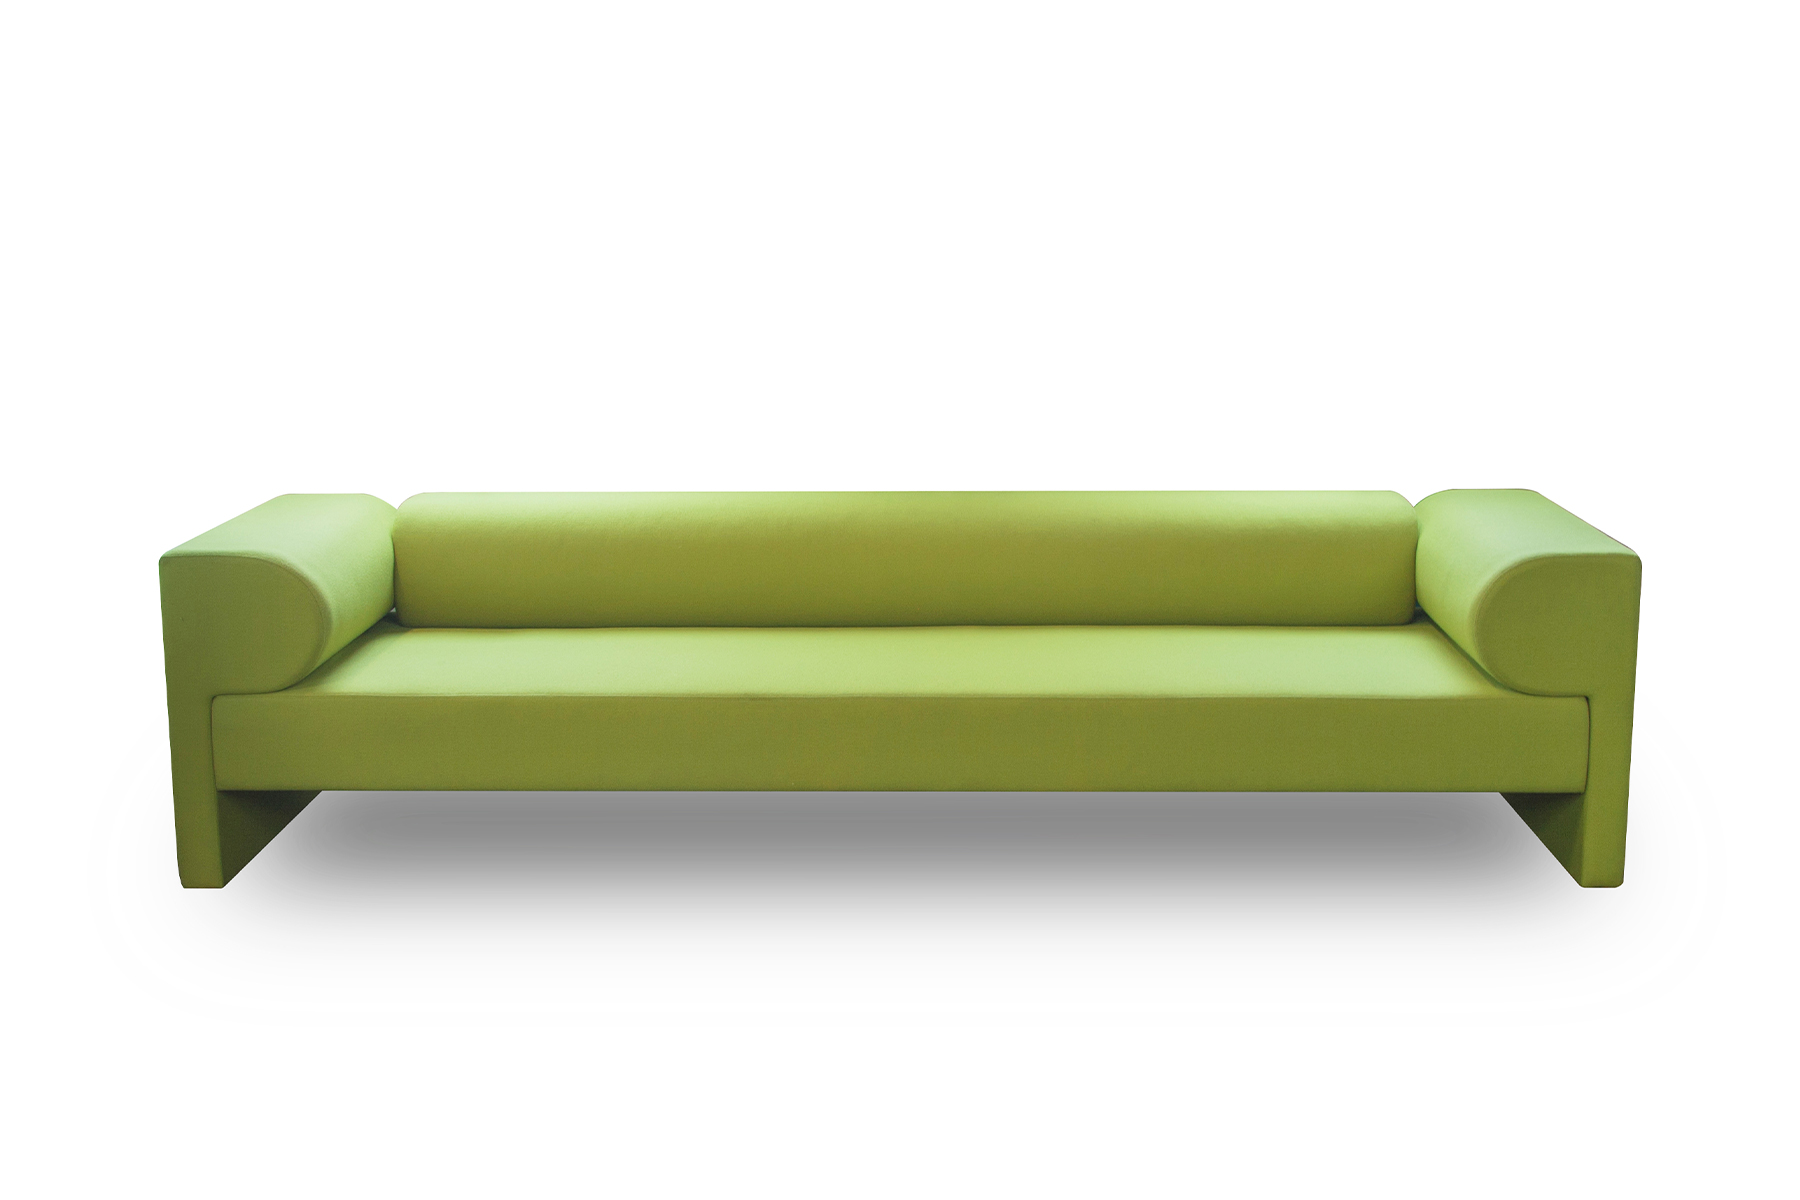 Genter Design Say Sofa by Jean de Merry